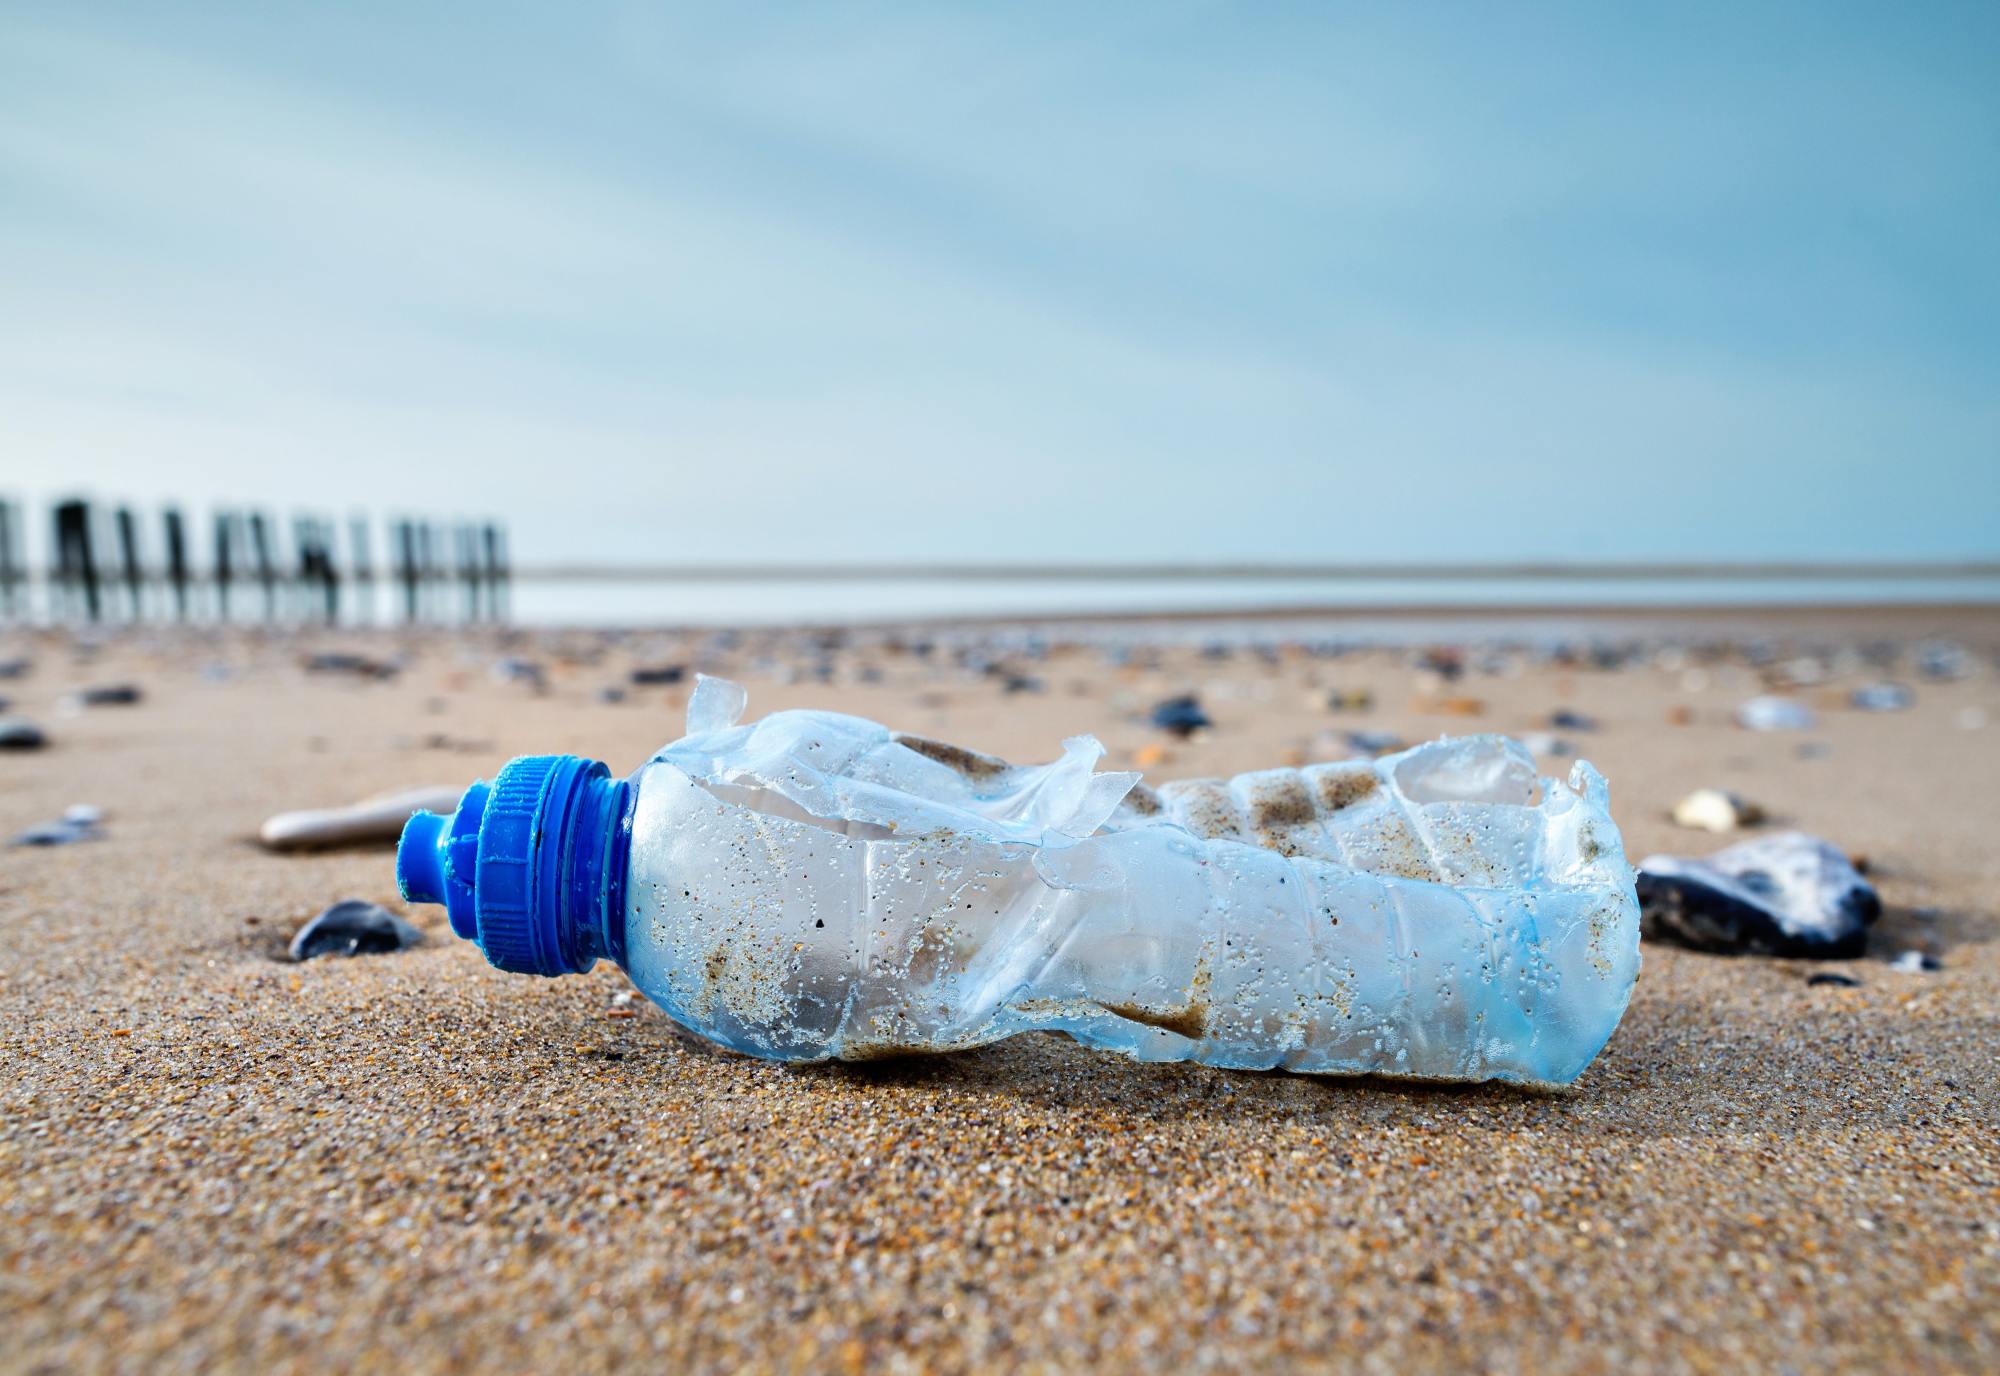 Plastic Bottle Pollution